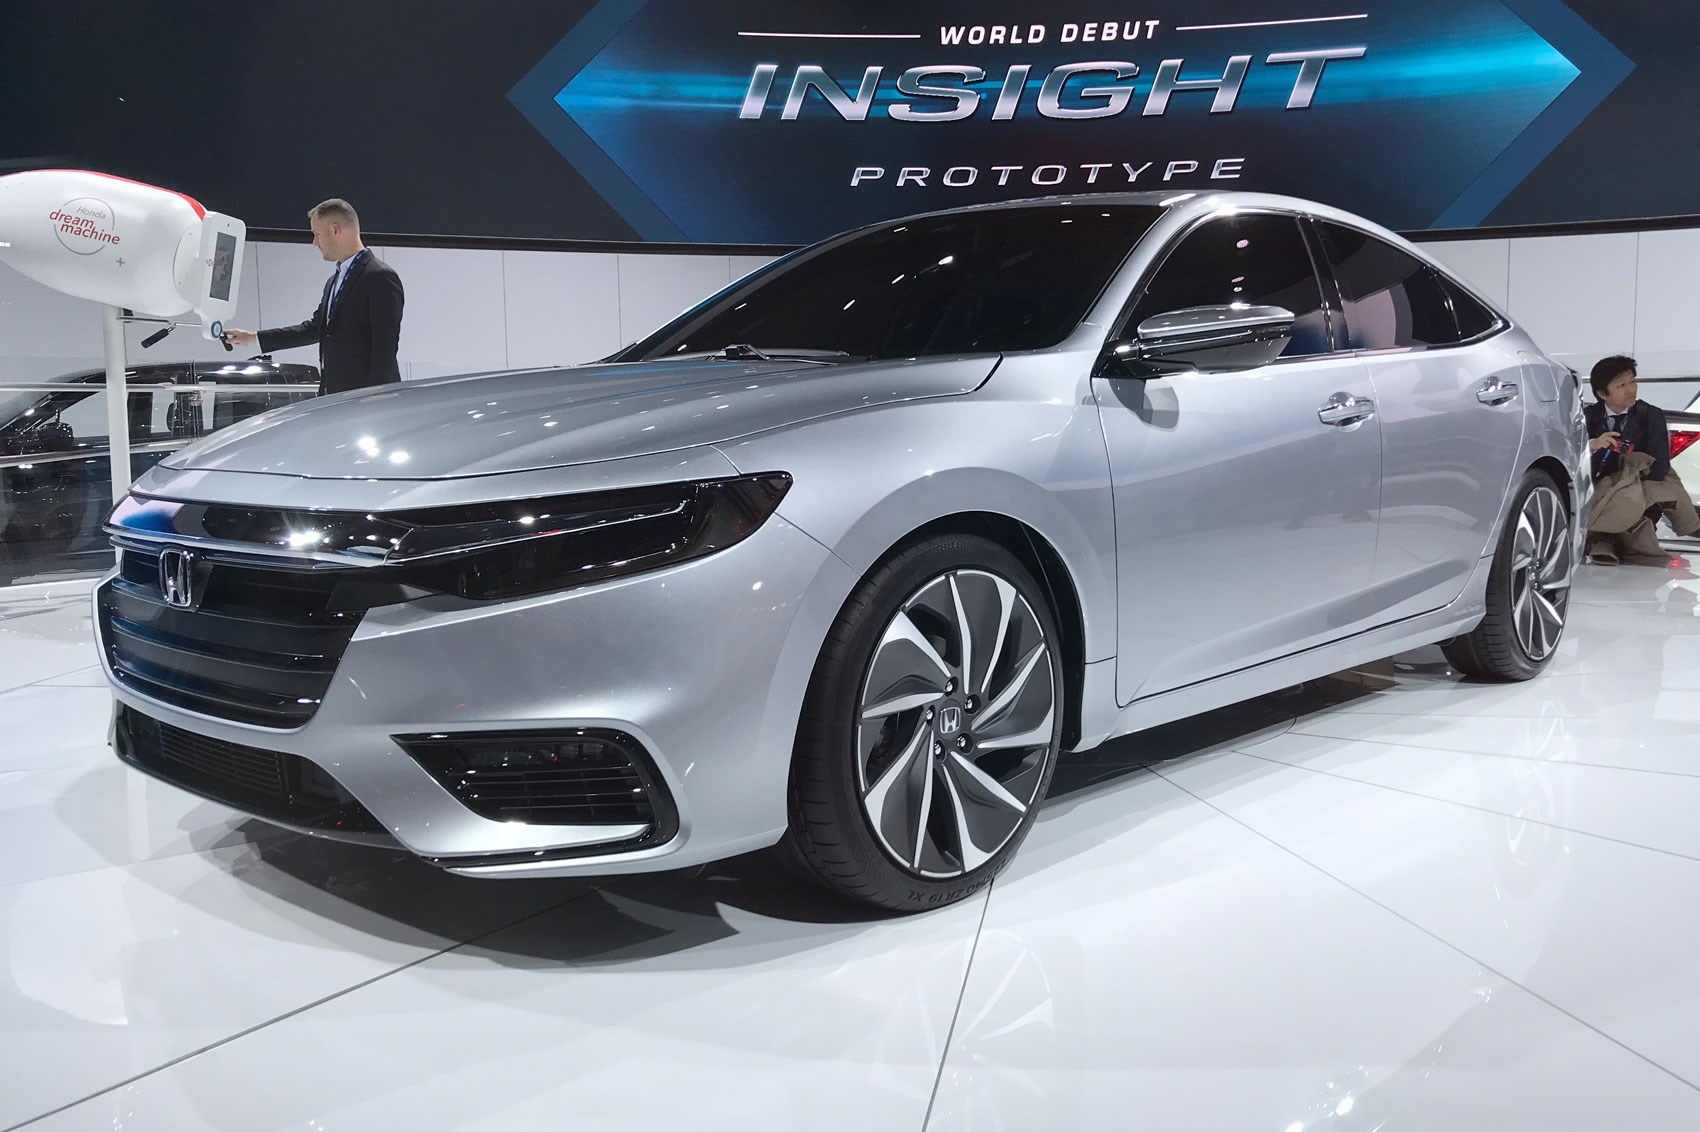 New Honda Insight Sleek Hybrid Prototype S Specs Detailed